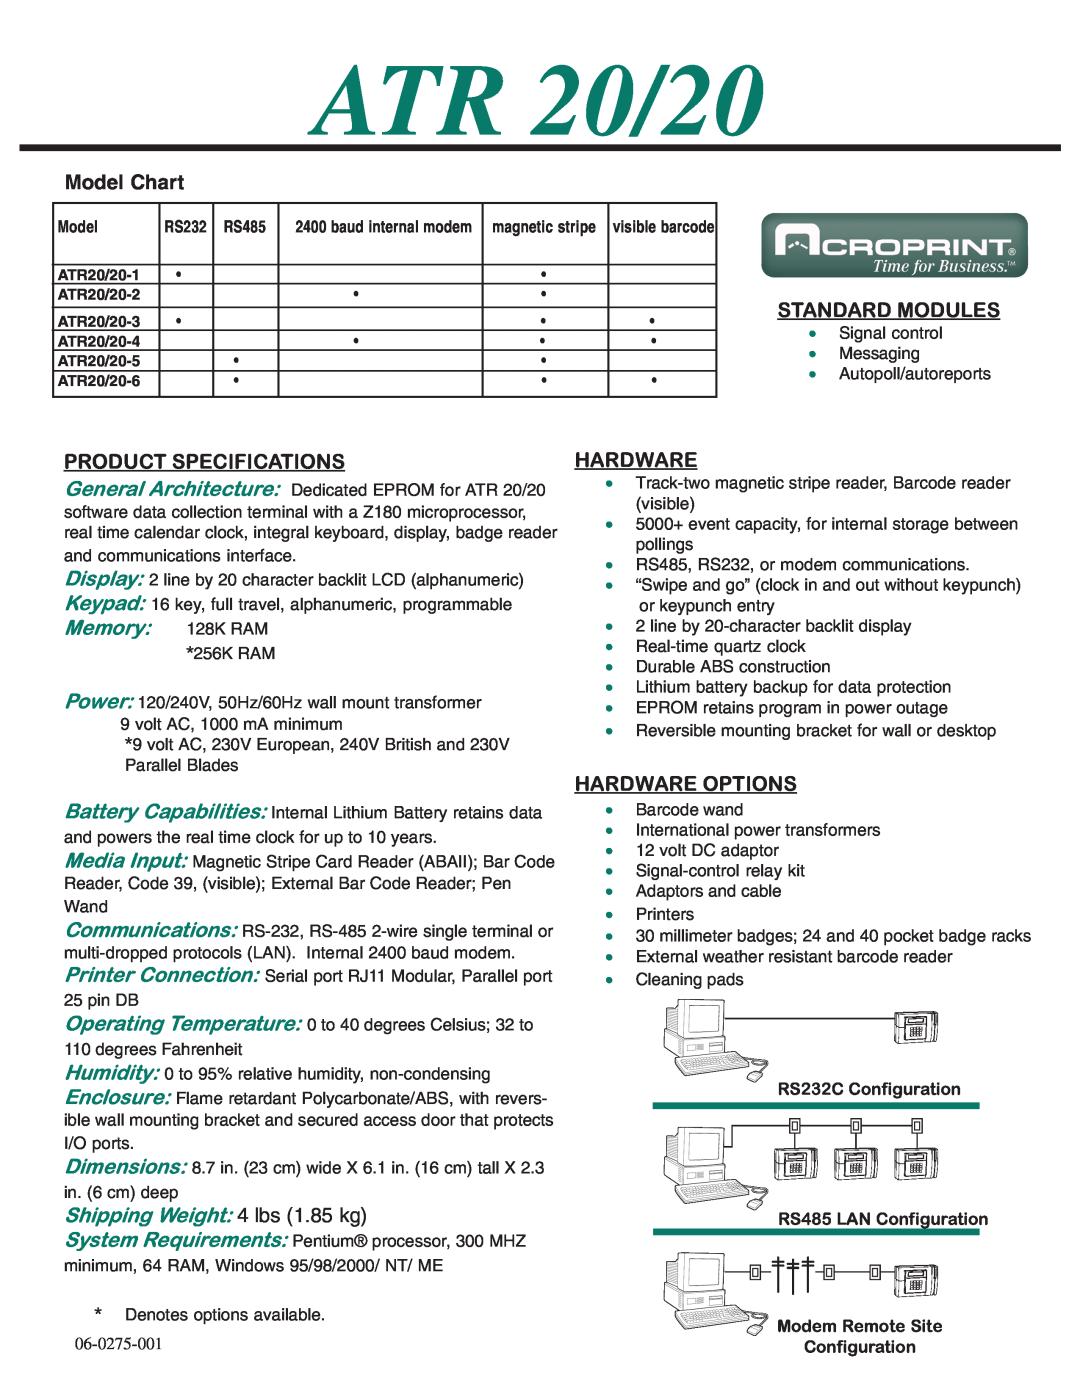 Acroprint ATR20/20-4, ATR20/20-5 Standard Modules, Product Specifications, Hardware Options, ATR 20/20, Model Chart 